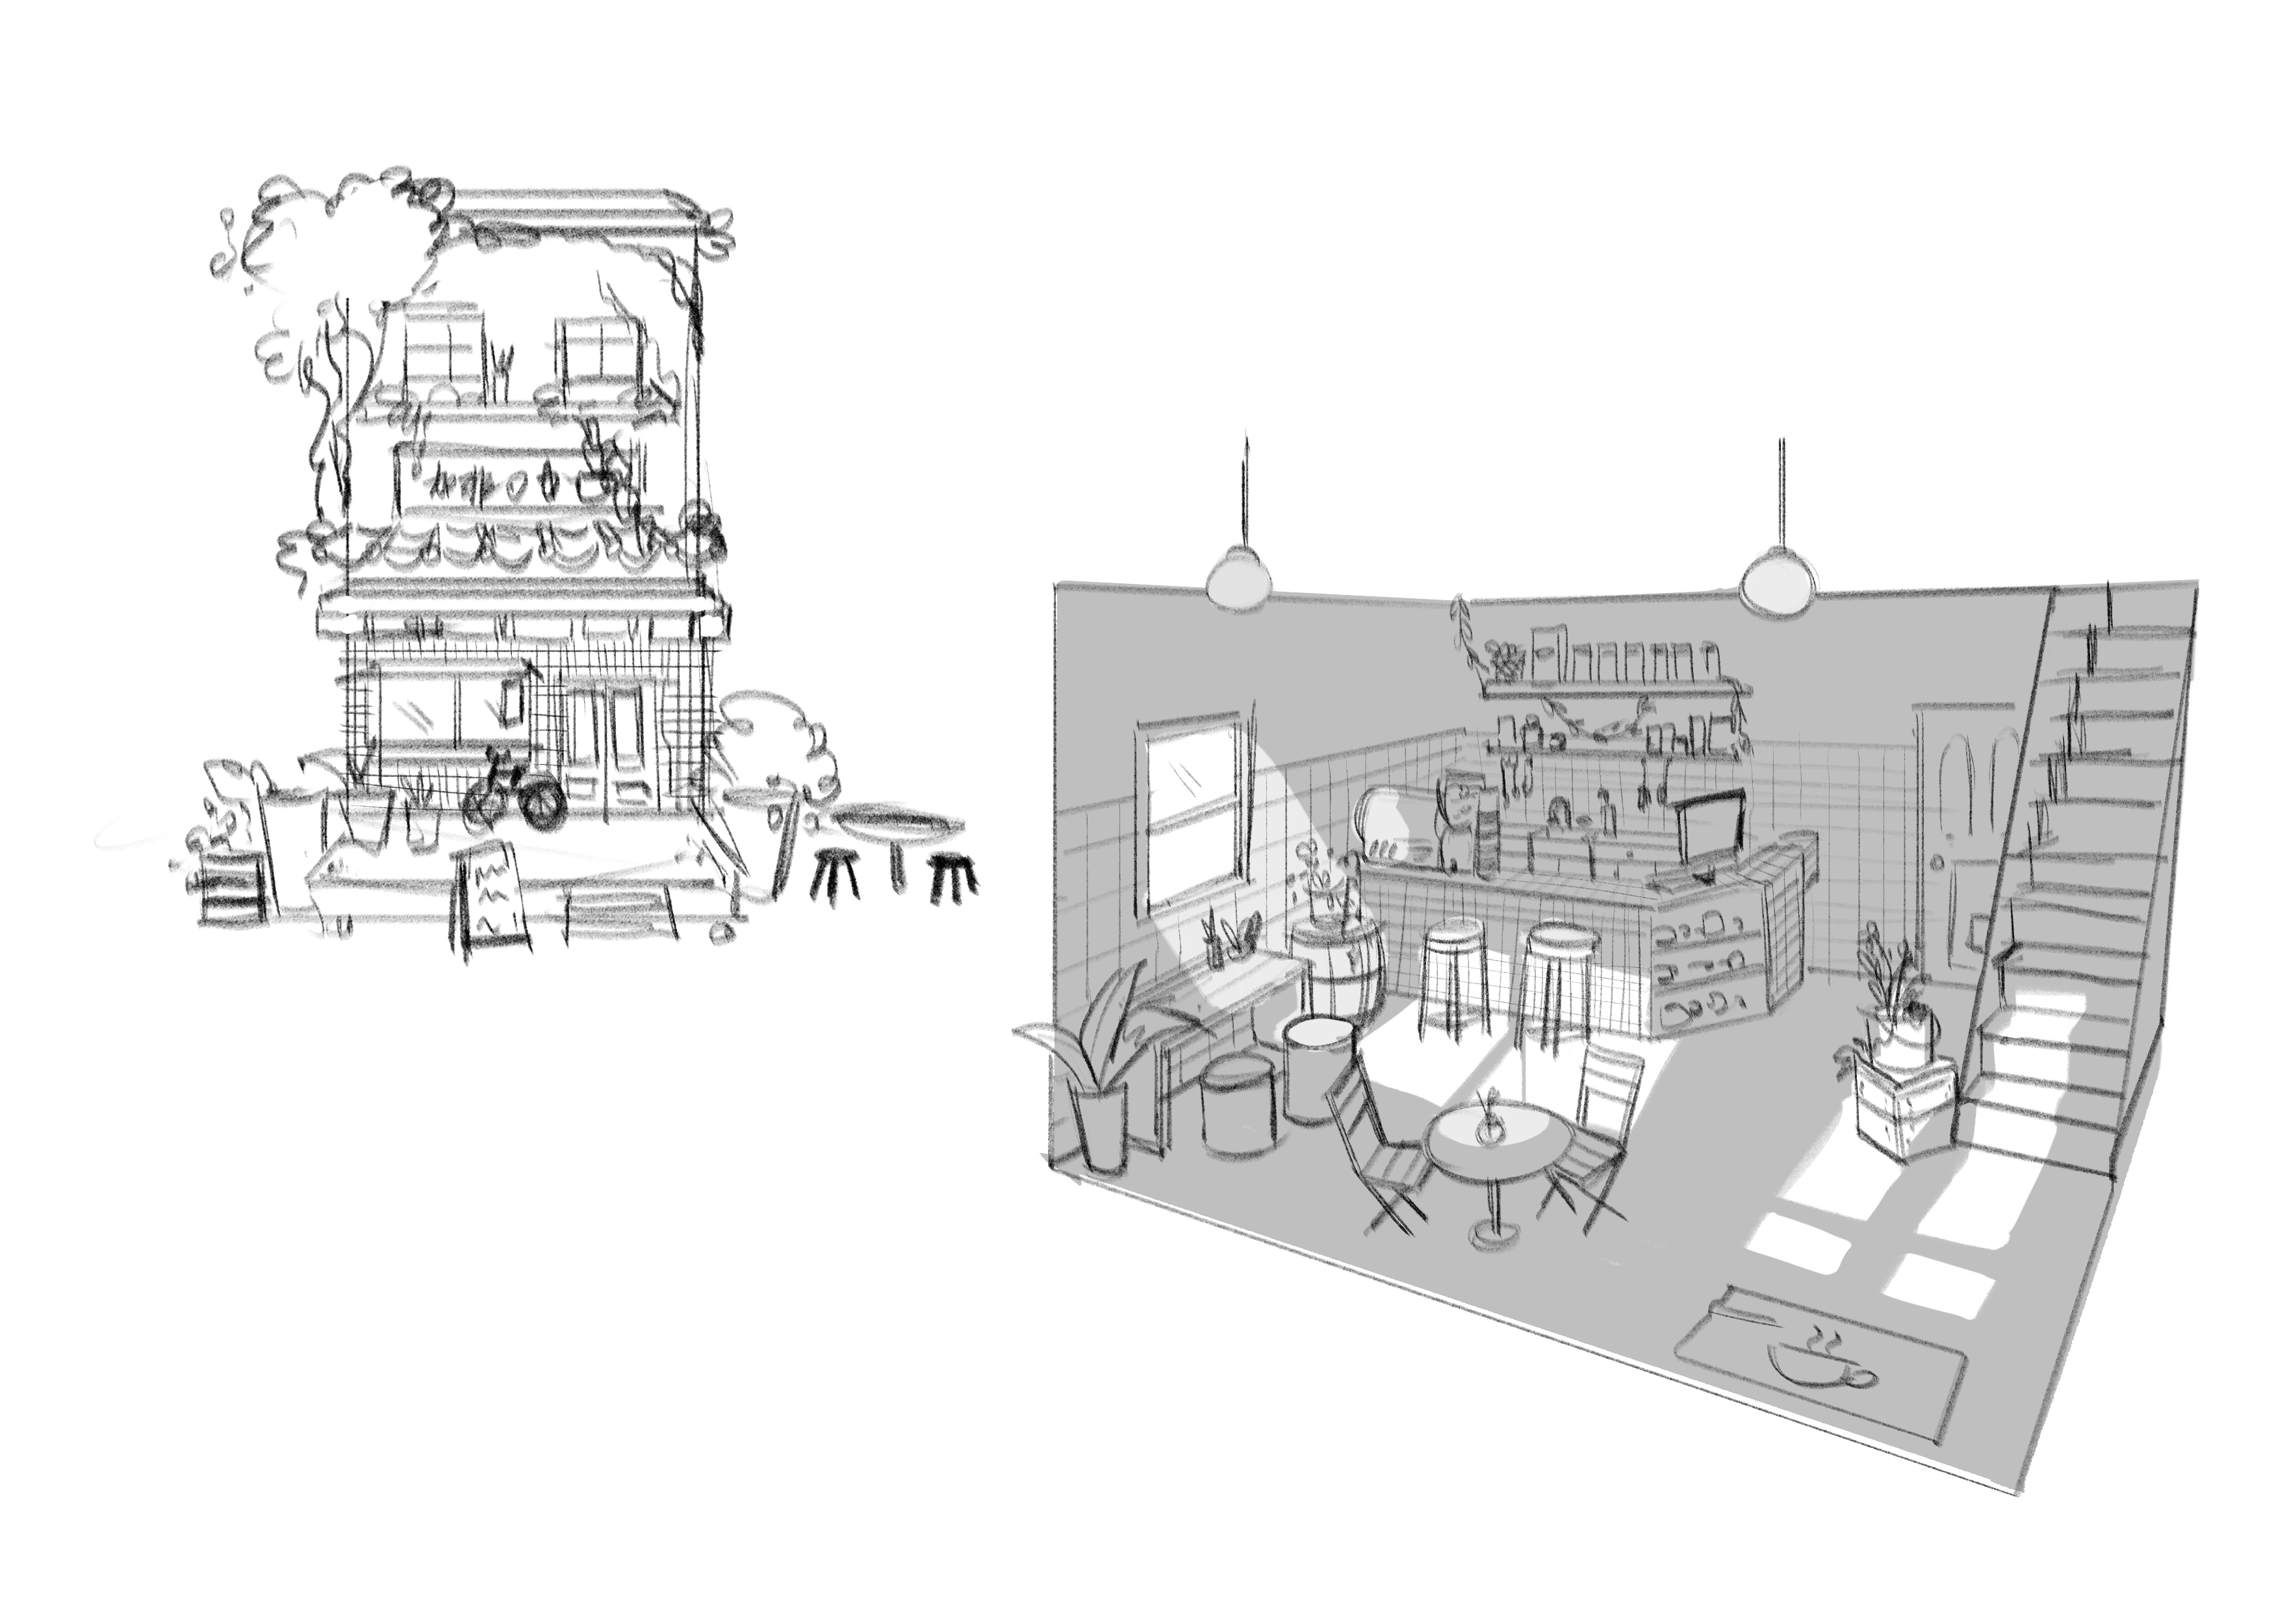 Concept Art of Cafe Exterior and Interior